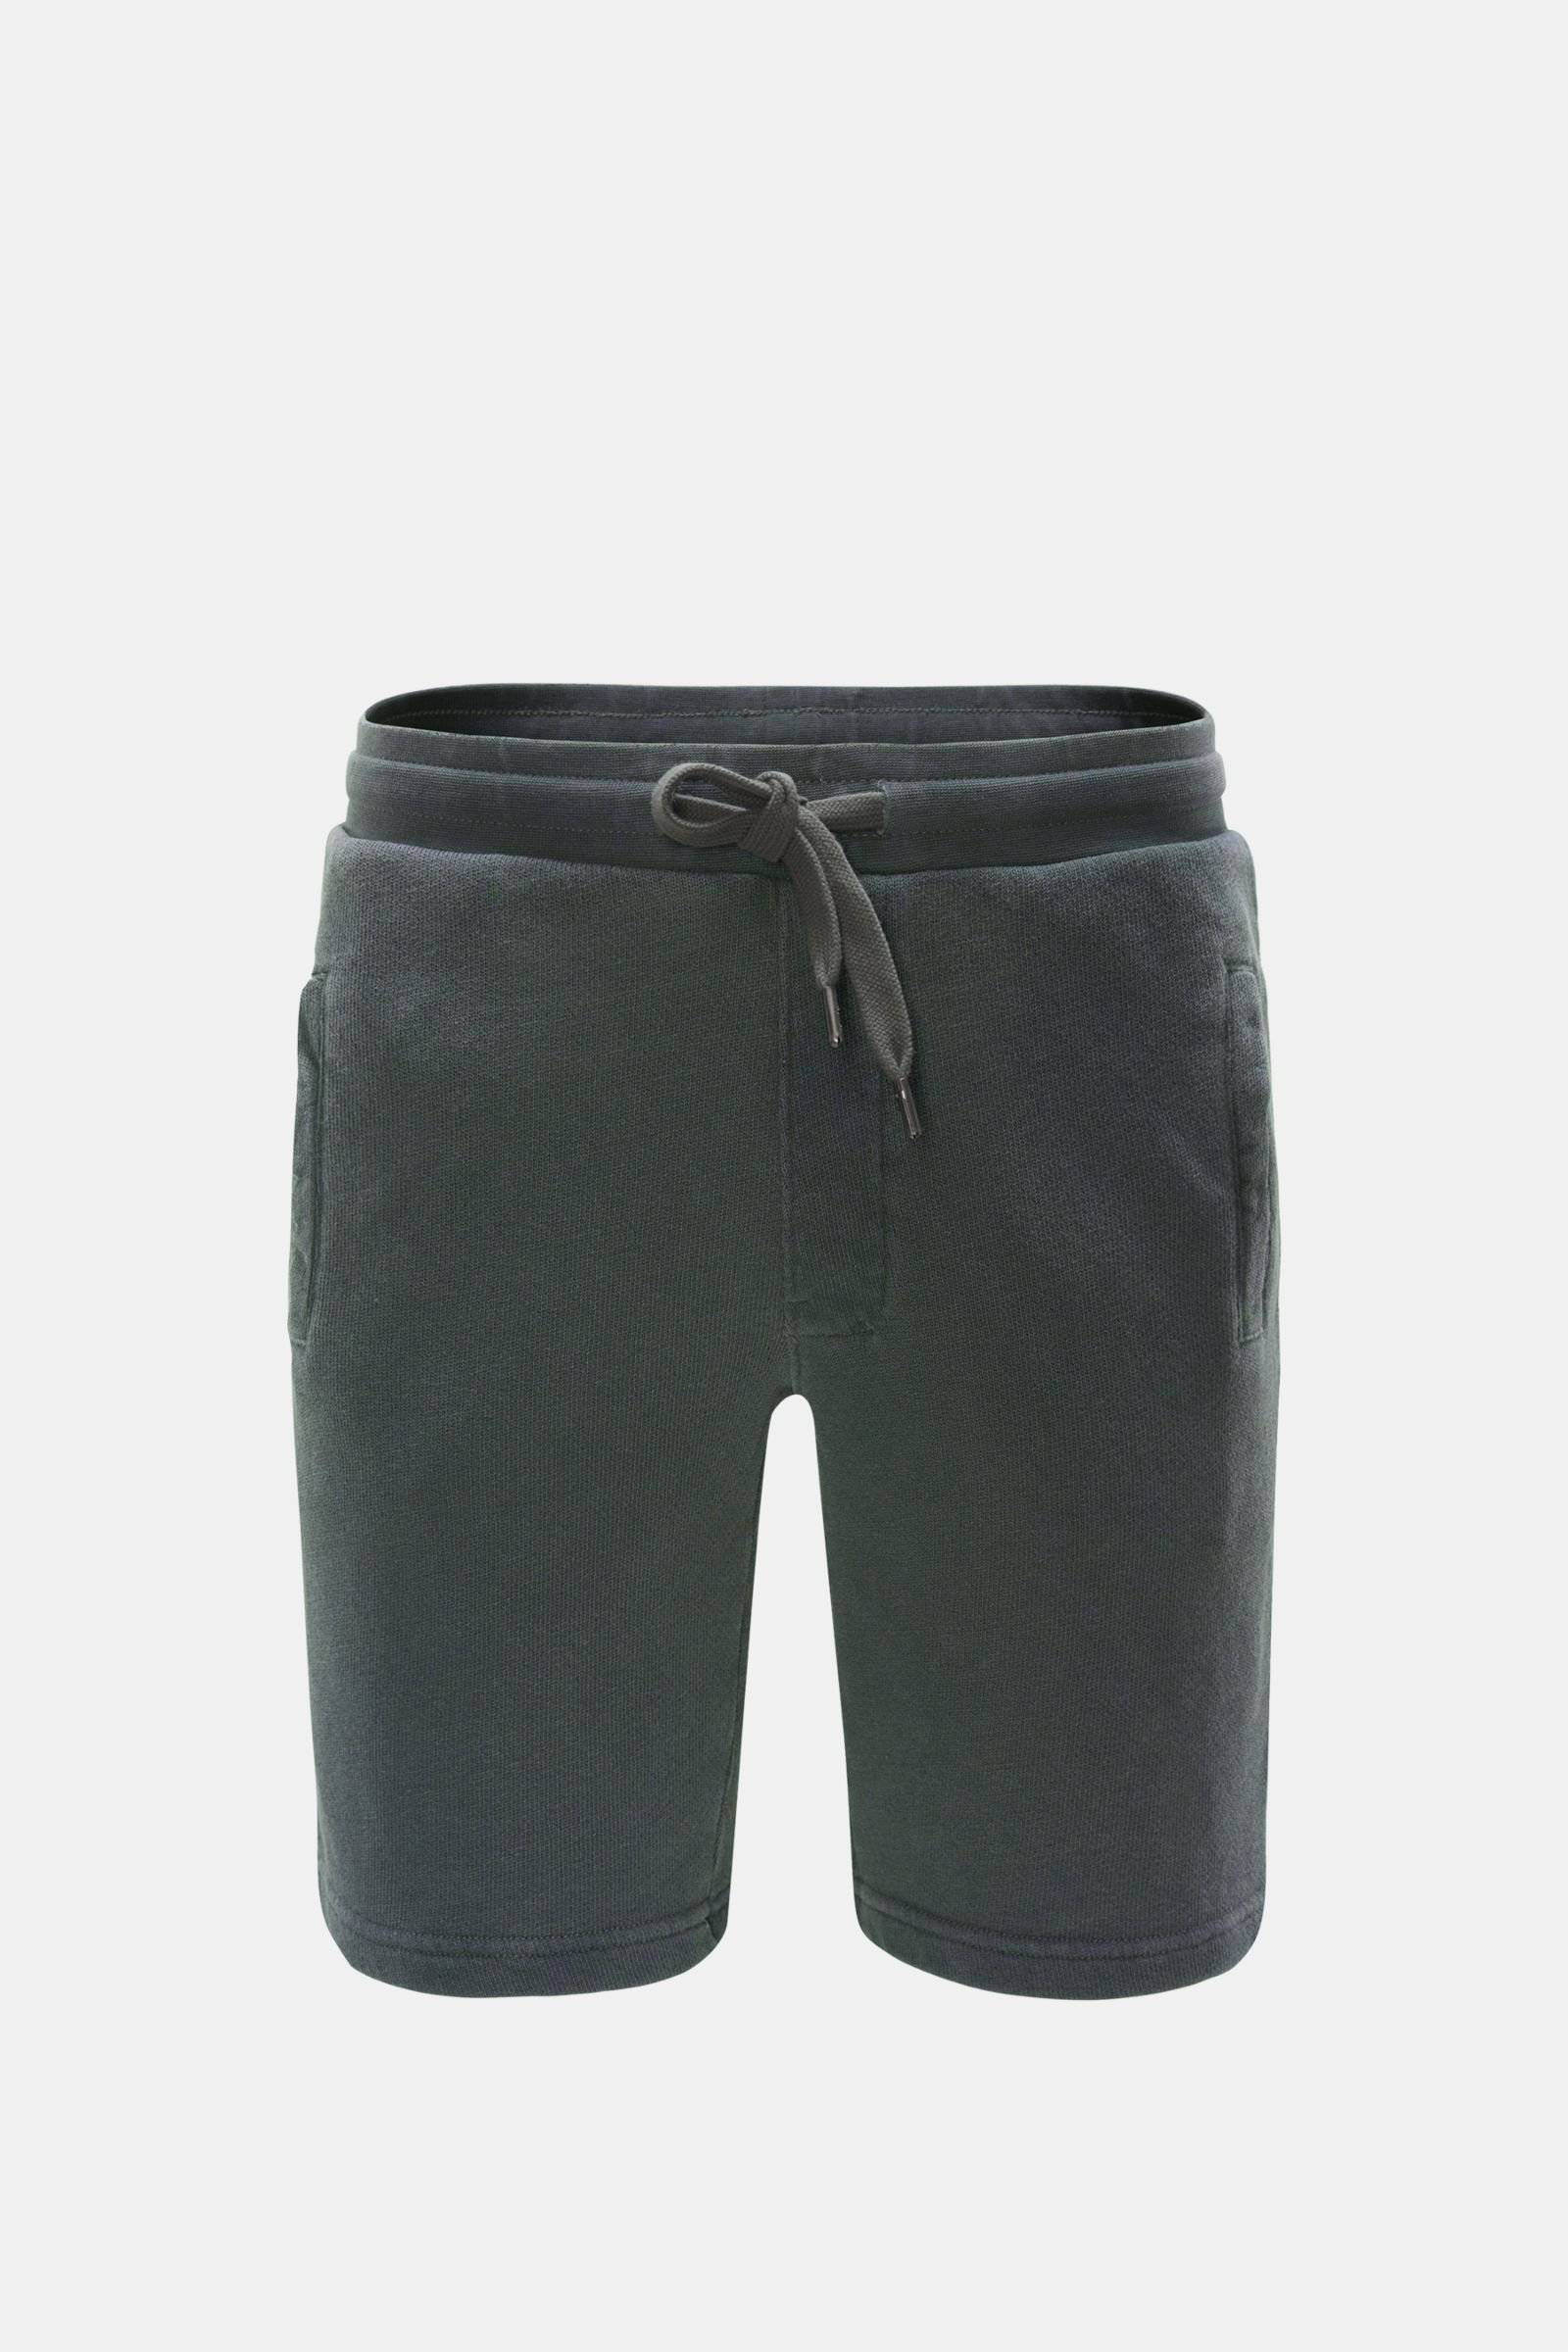 Sweat shorts grey-green